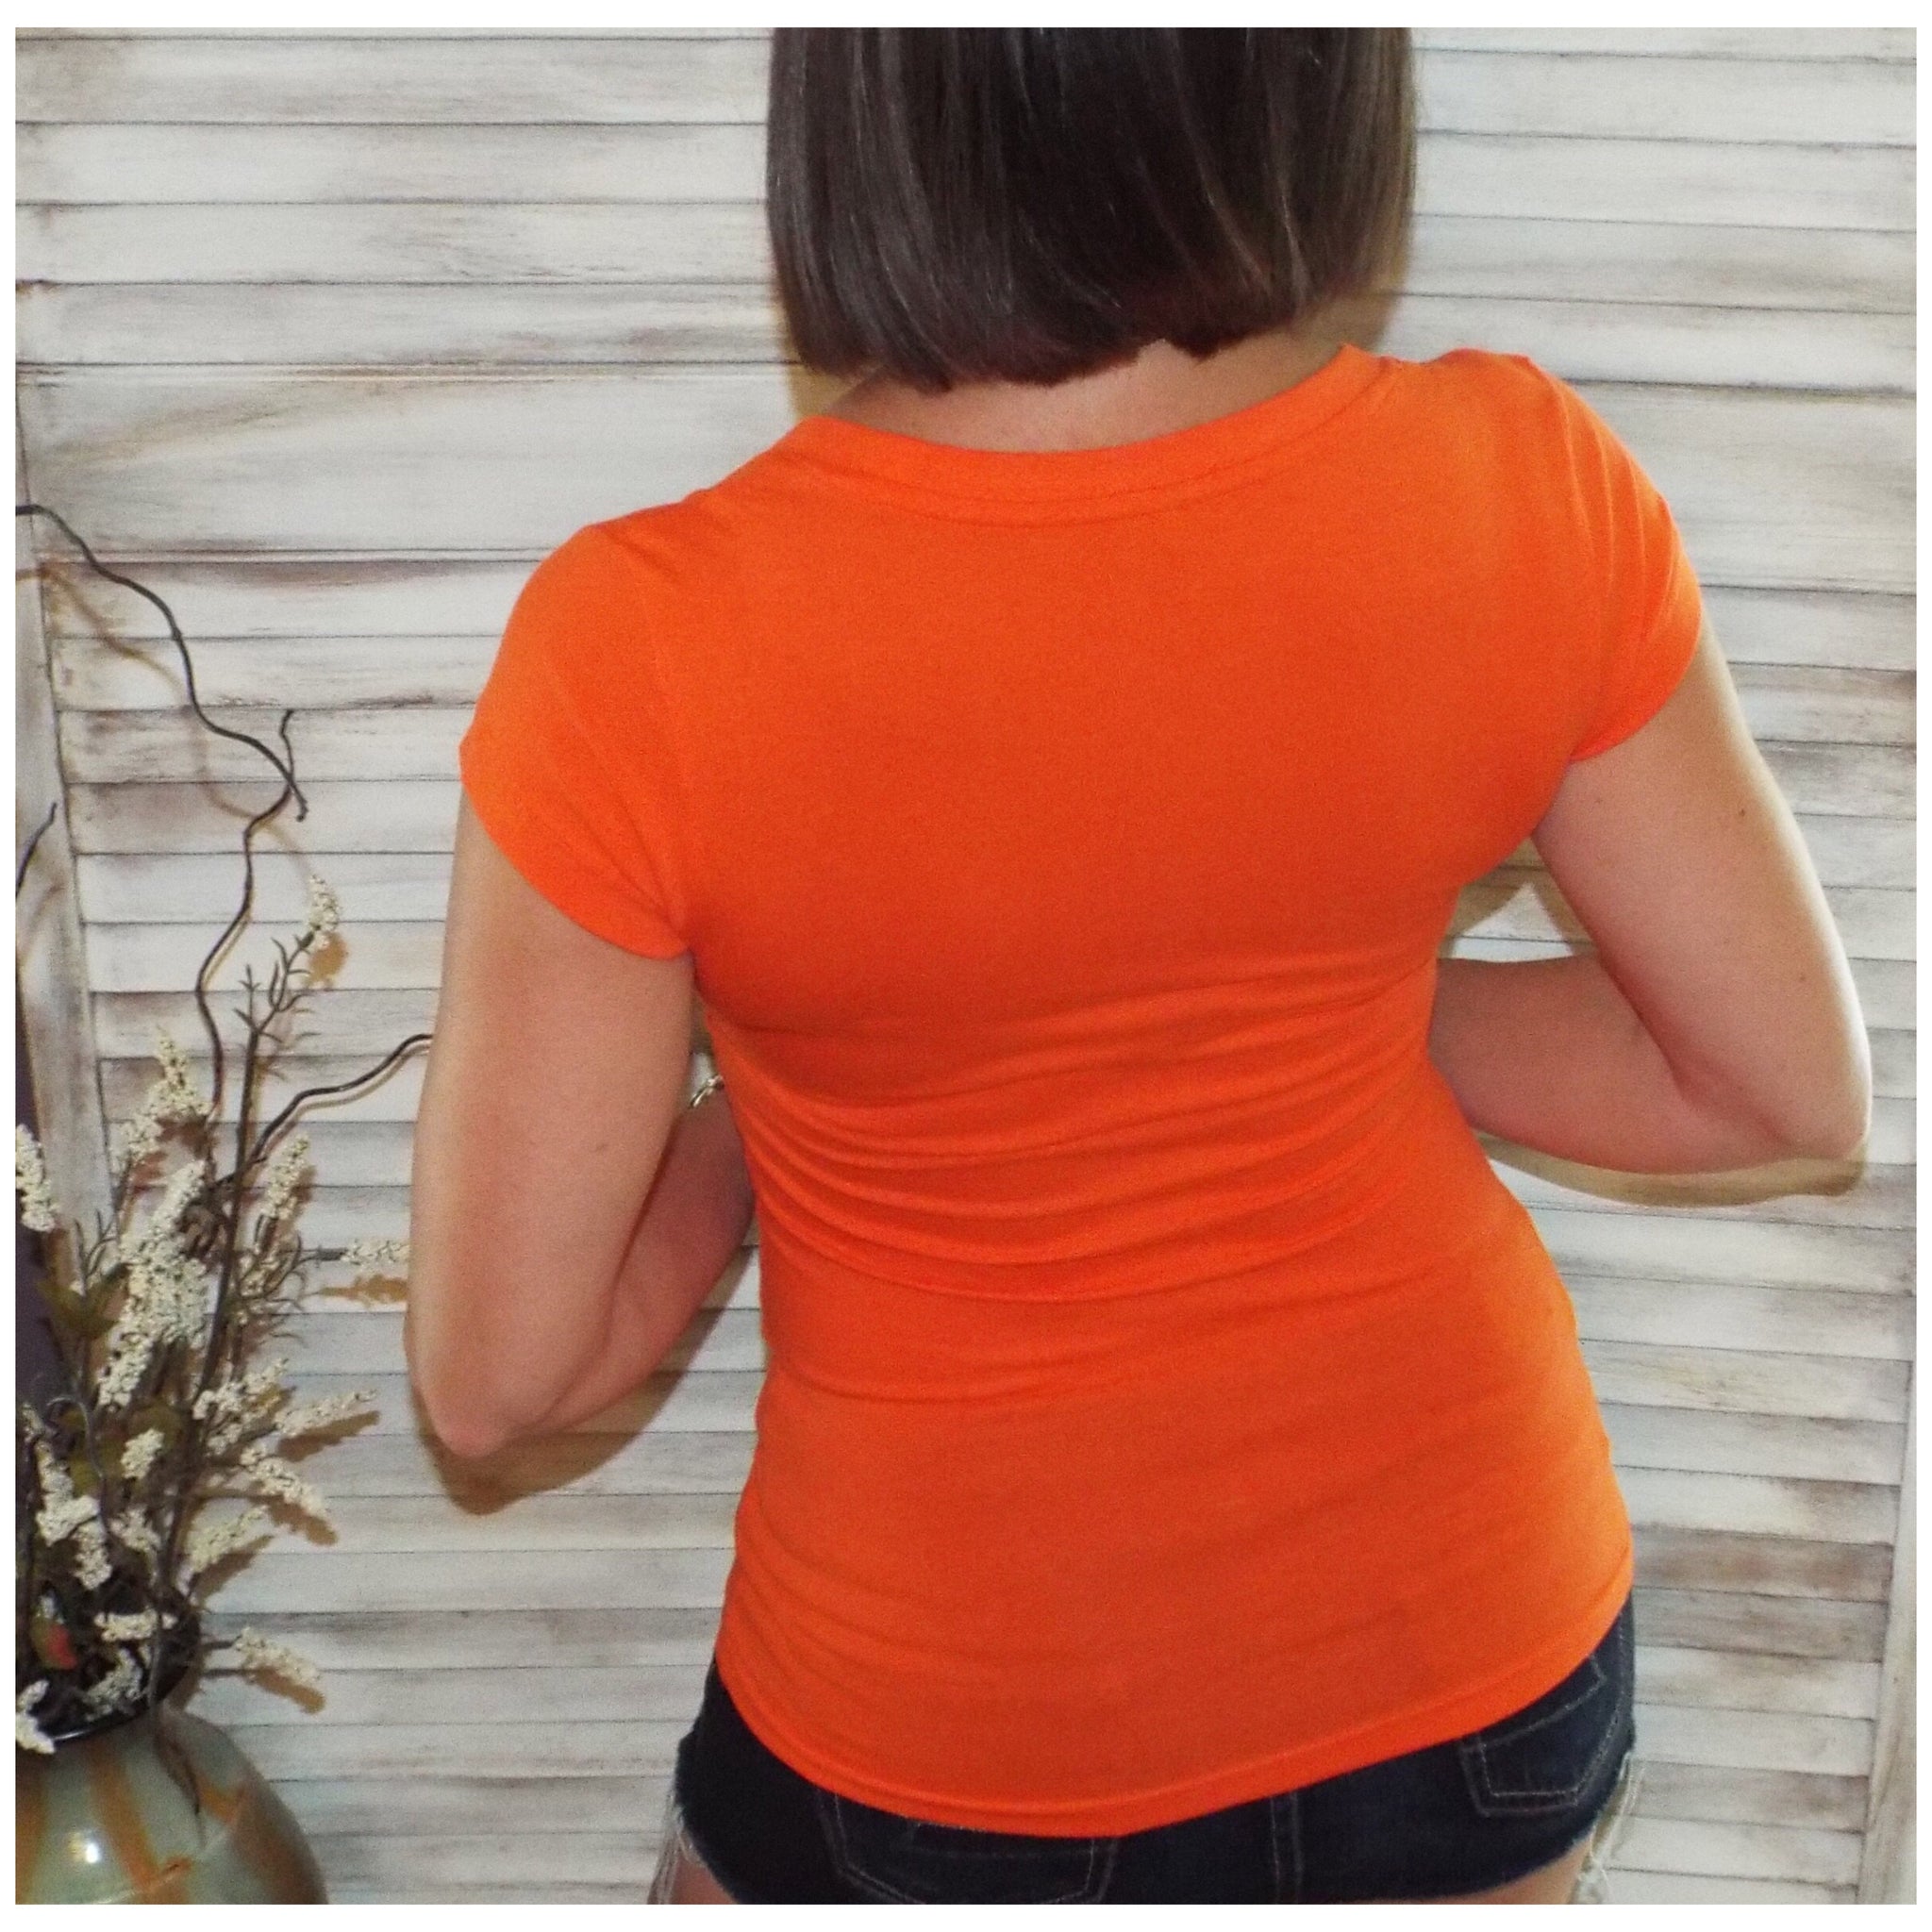 Low Cut Scoop Neck Cleavage Baby Slimming Basic Tee Shirt Orange S/M/L/XL